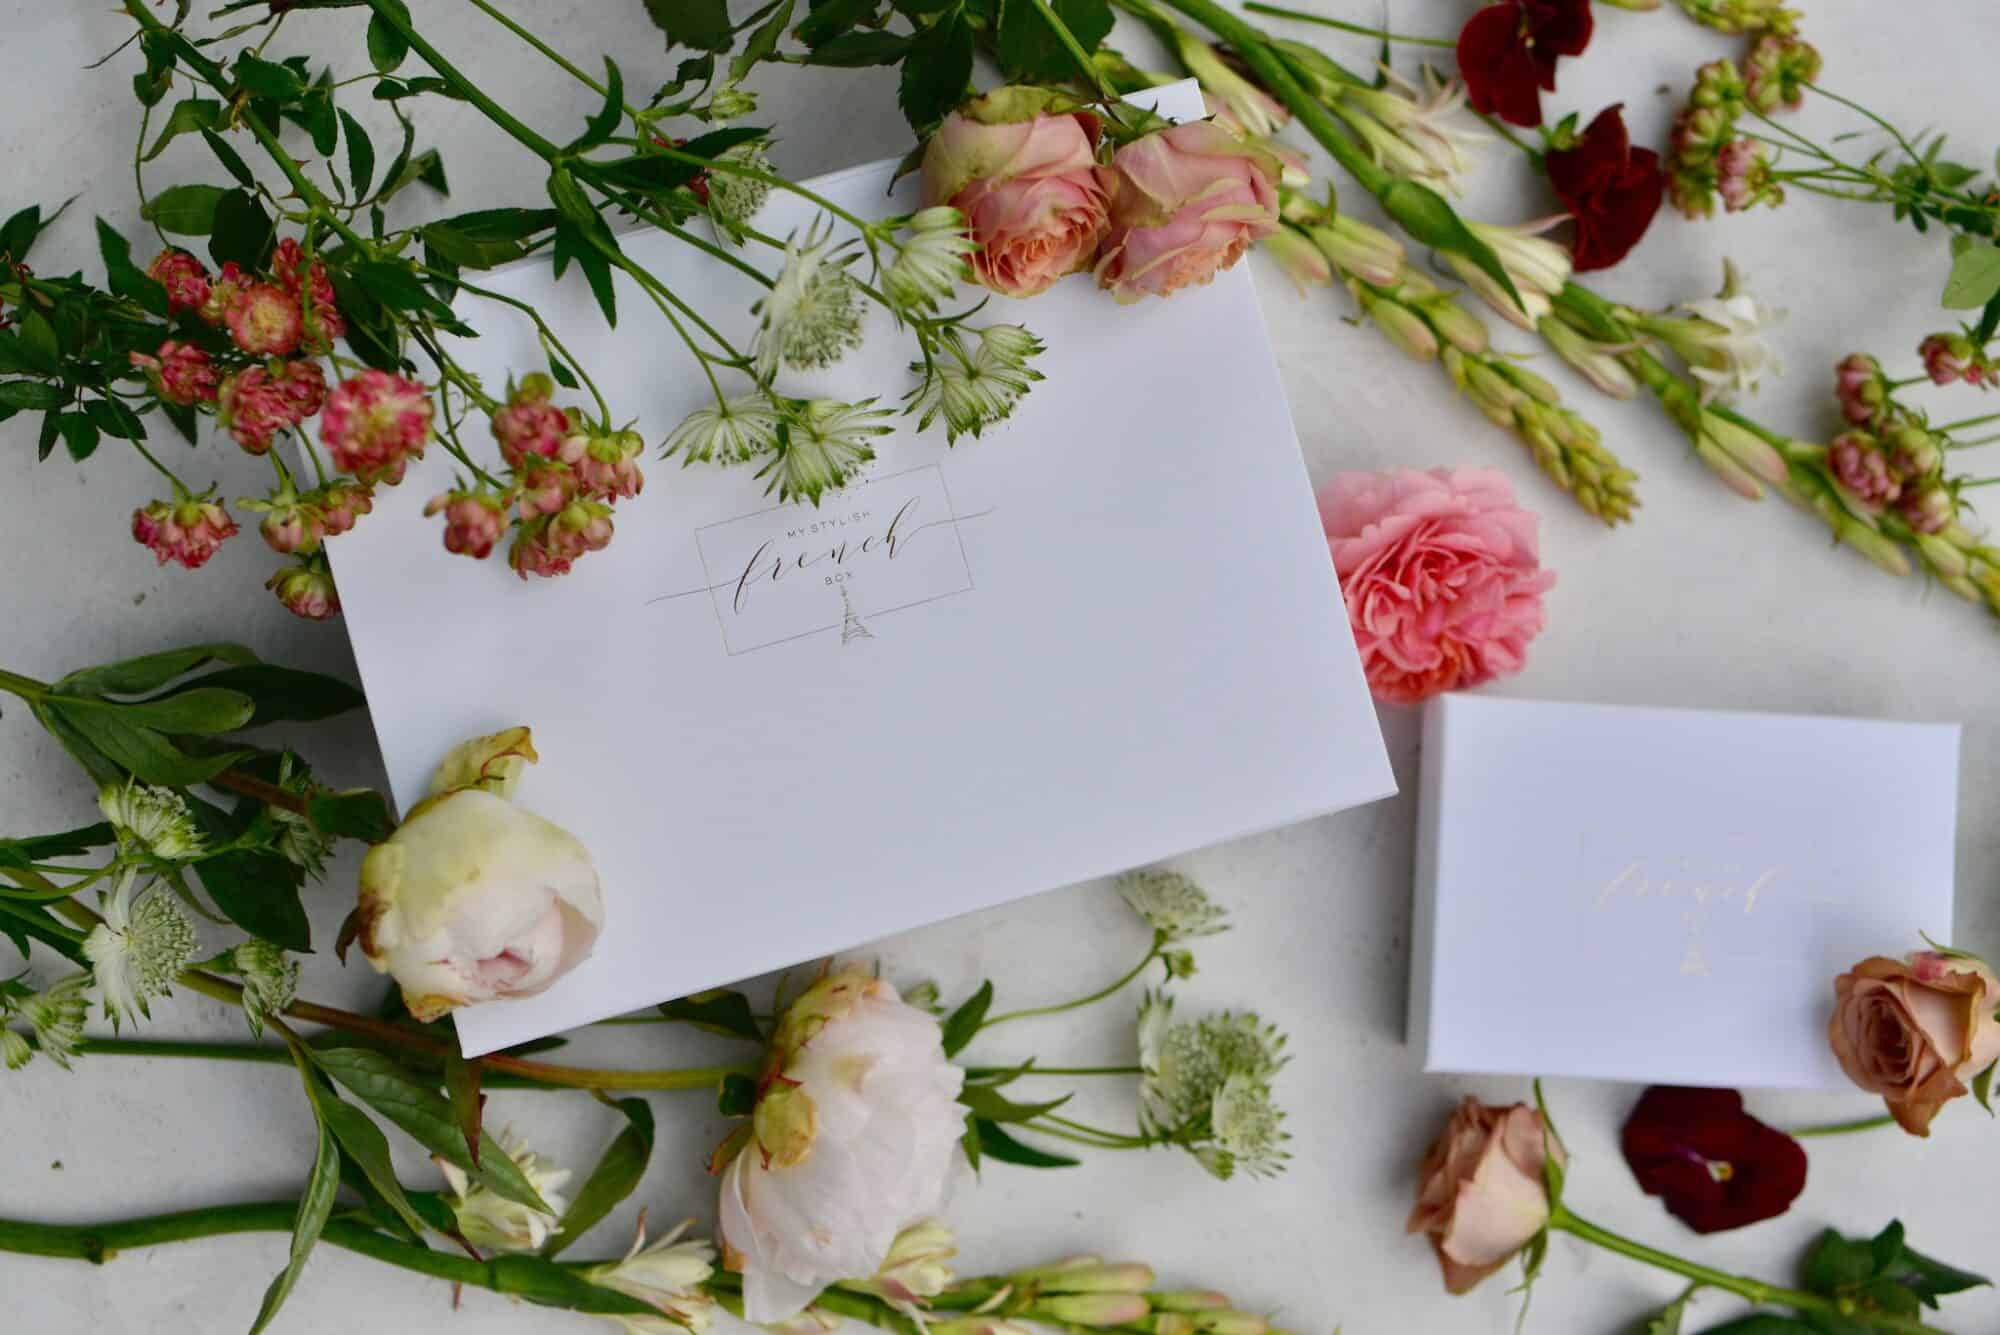 A handwritten invitation lying amidst flowers.